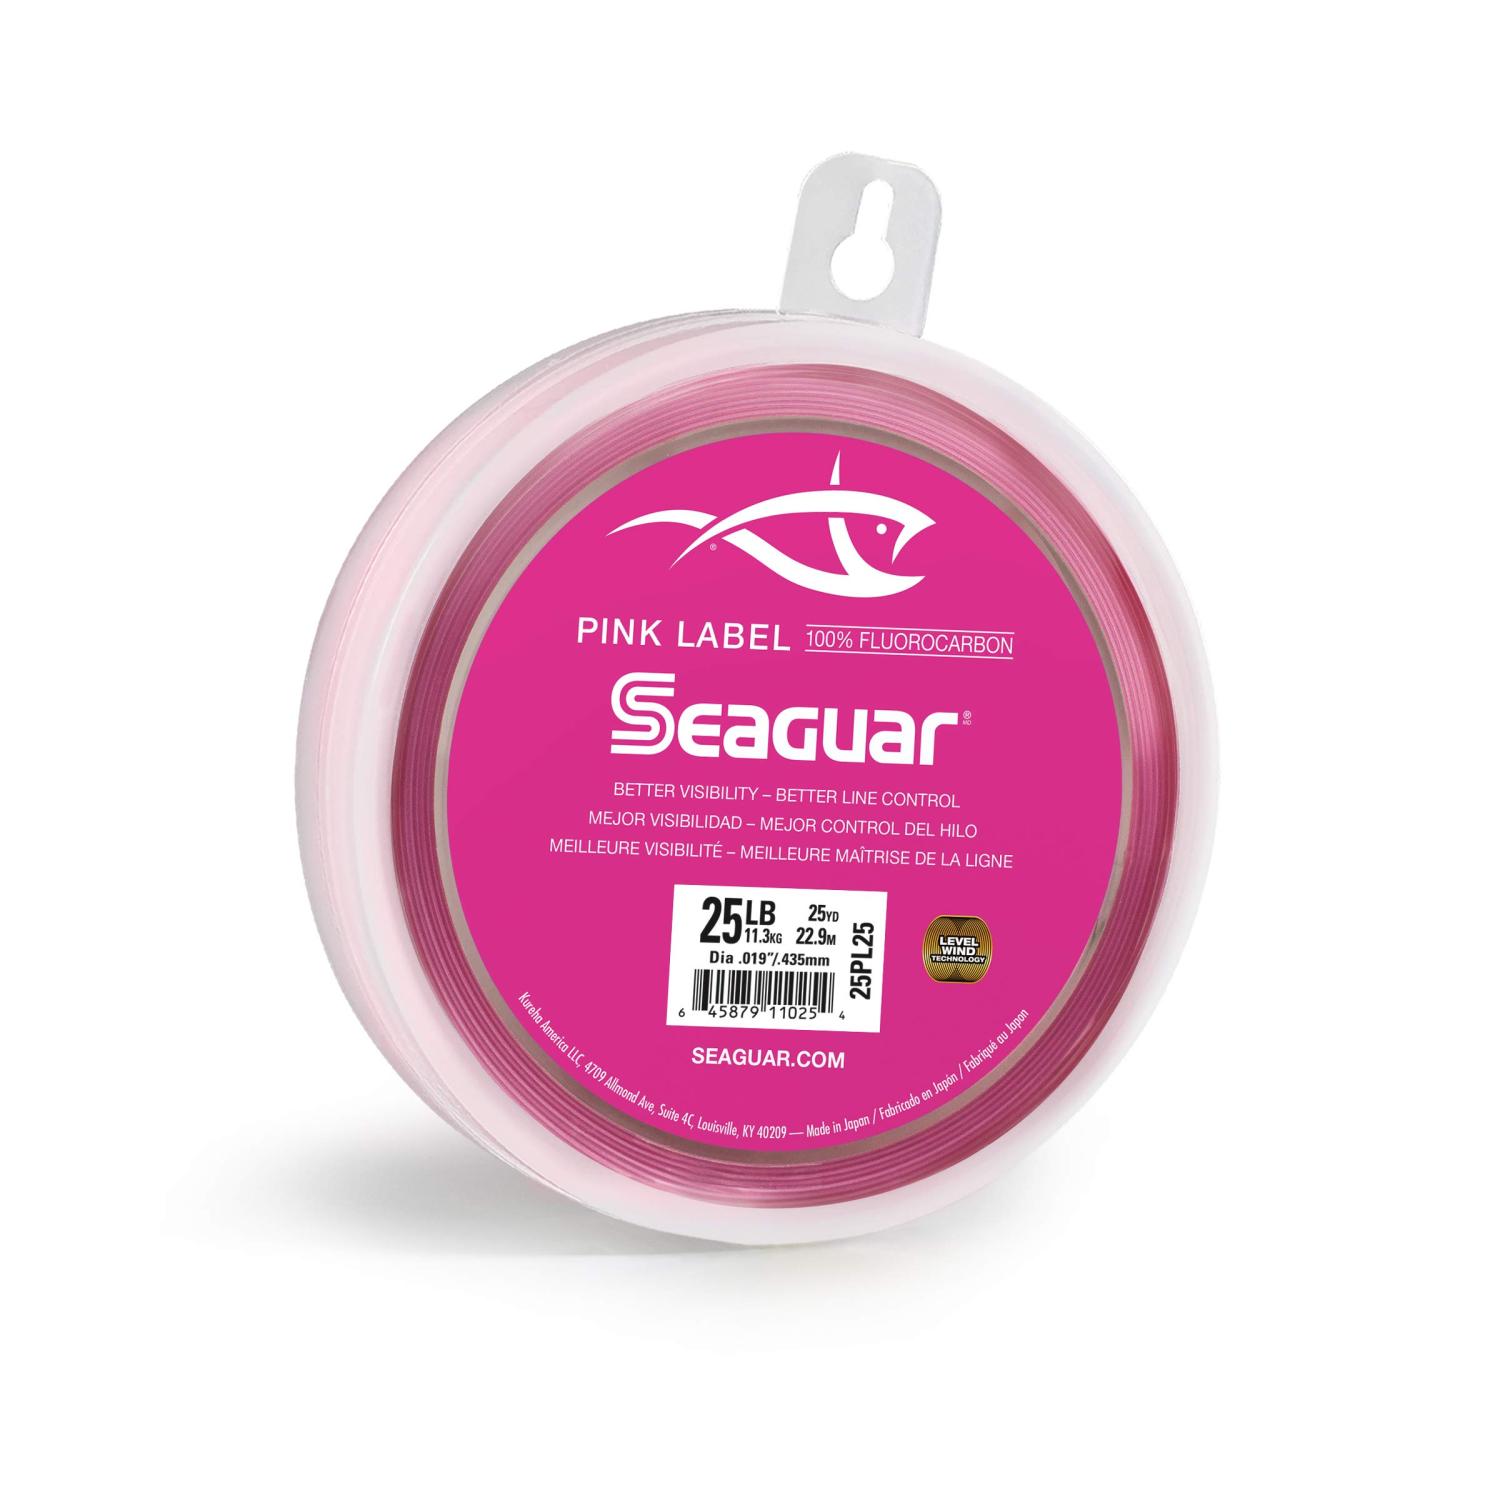 Seaguar Pink Label Fluorocarbon Fishing Leader Line, 100% Fluorocarbon,  Minimal Stretch, Excellent Abrasion Resistance and Strength 20 lb./25 yd.